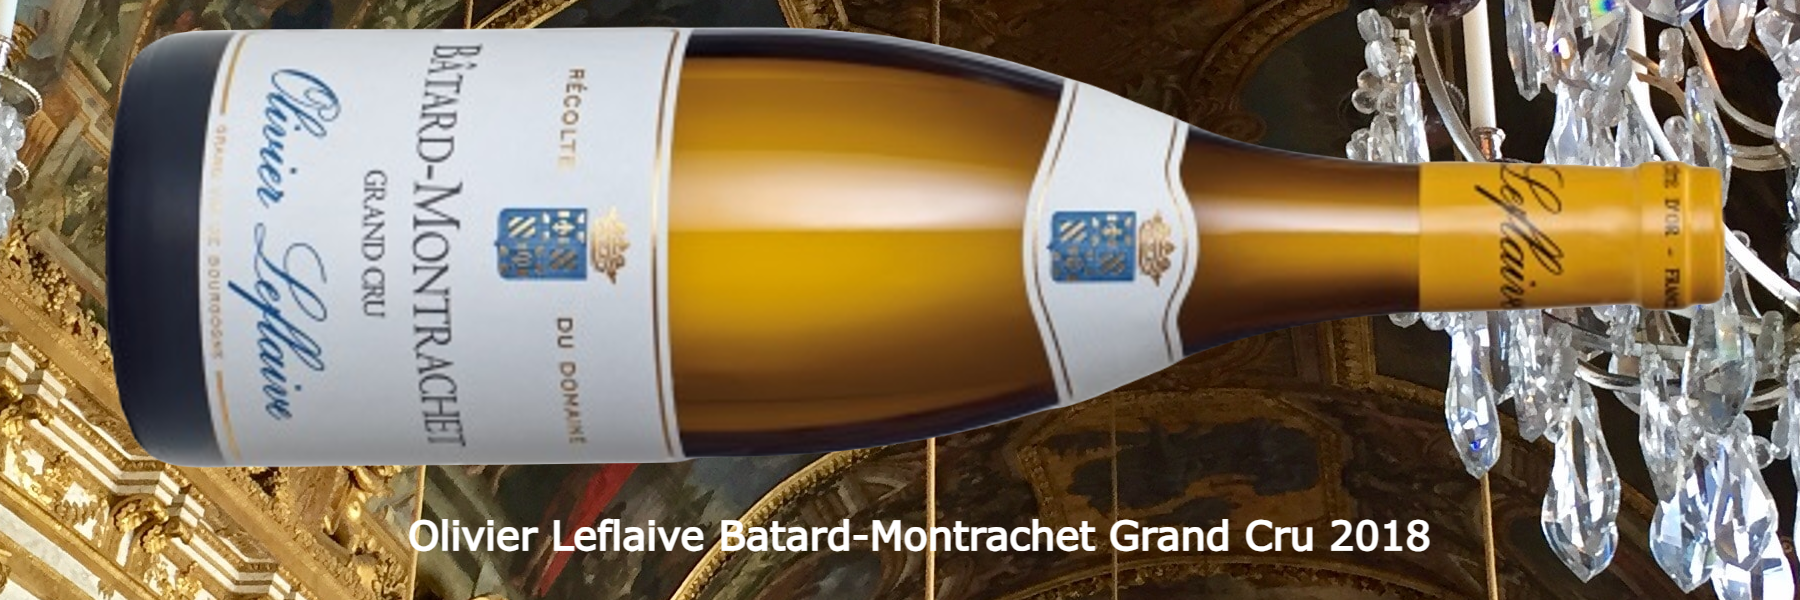 Olivier Leflaive Batard-Montrachet Grand Cru 2018